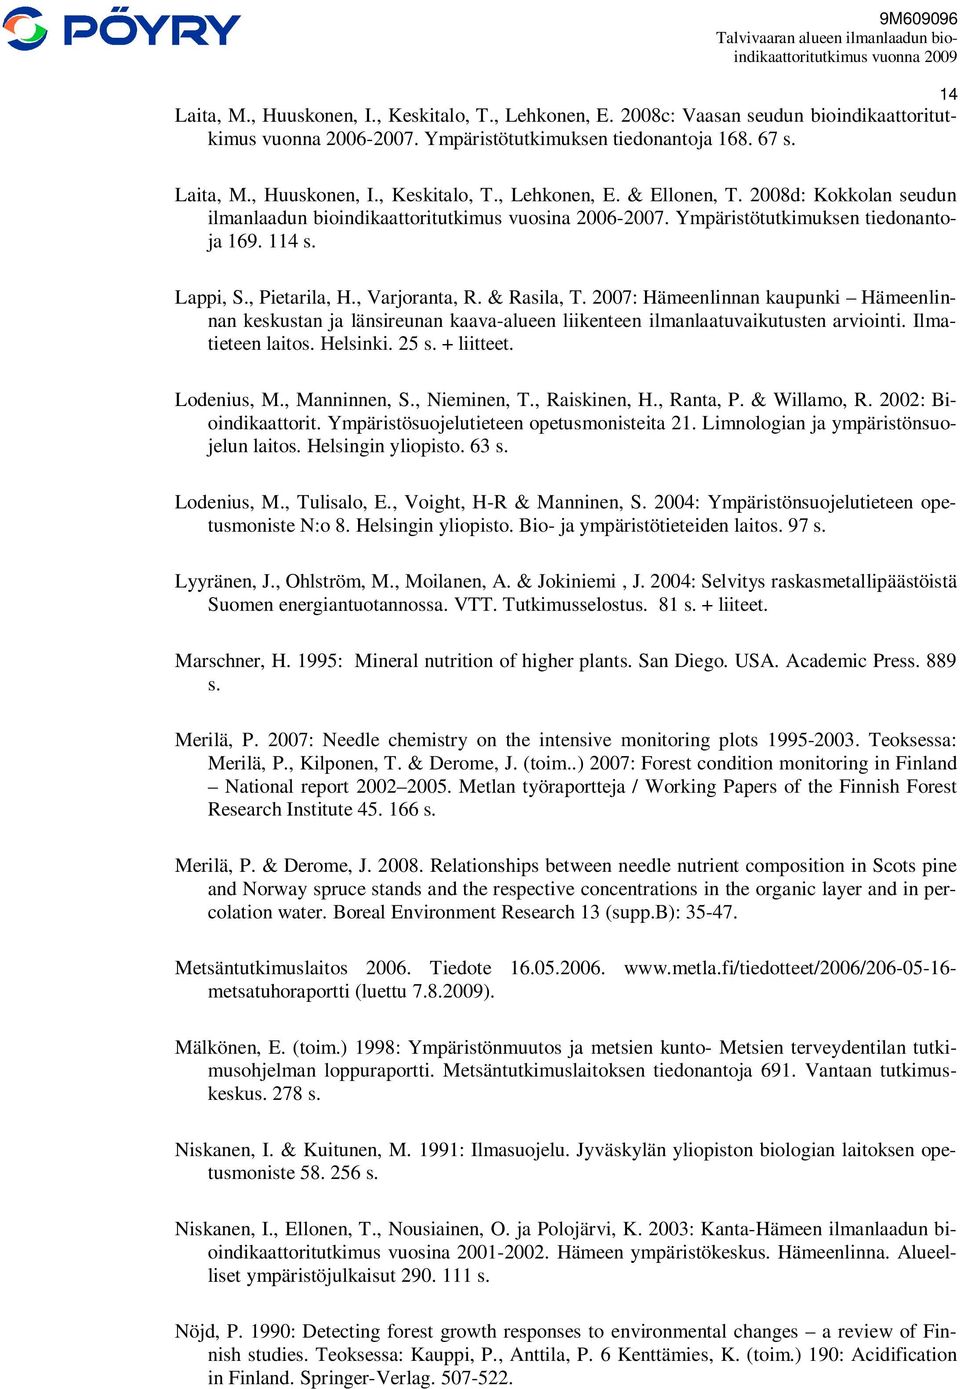 Ympäristötutkimuksen tiedonantoja 169. 114 s. Lappi, S., Pietarila, H., Varjoranta, R. & Rasila, T.